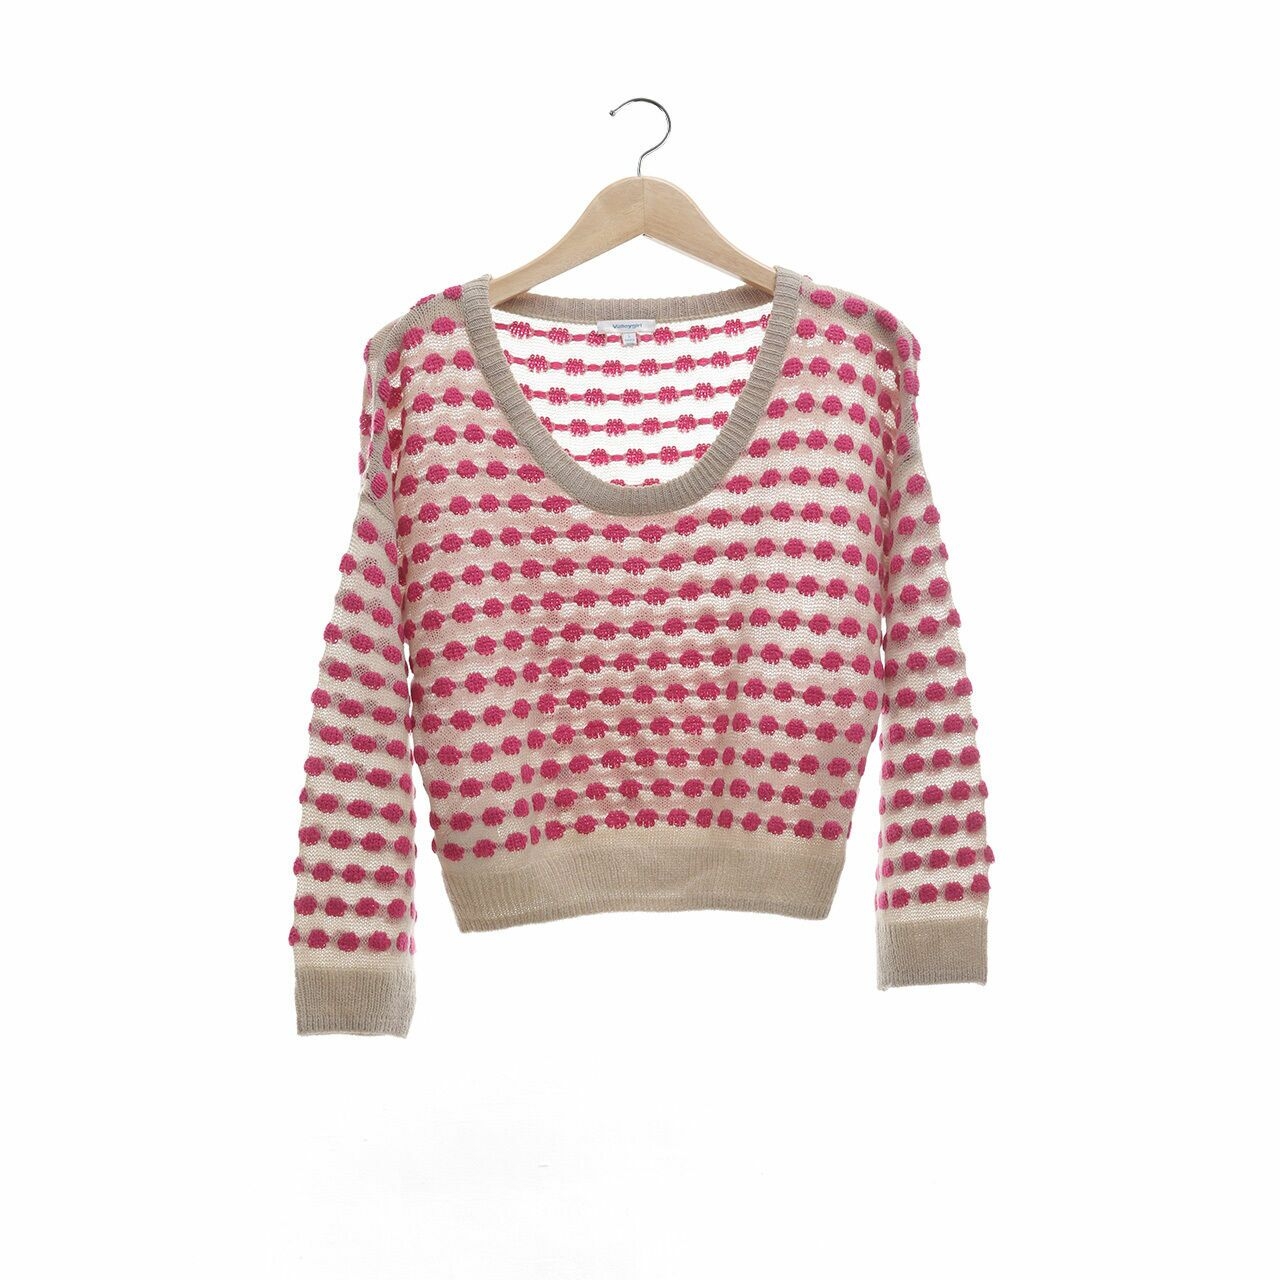 Valley Girl Beige & Fuchsia Knit Sweater